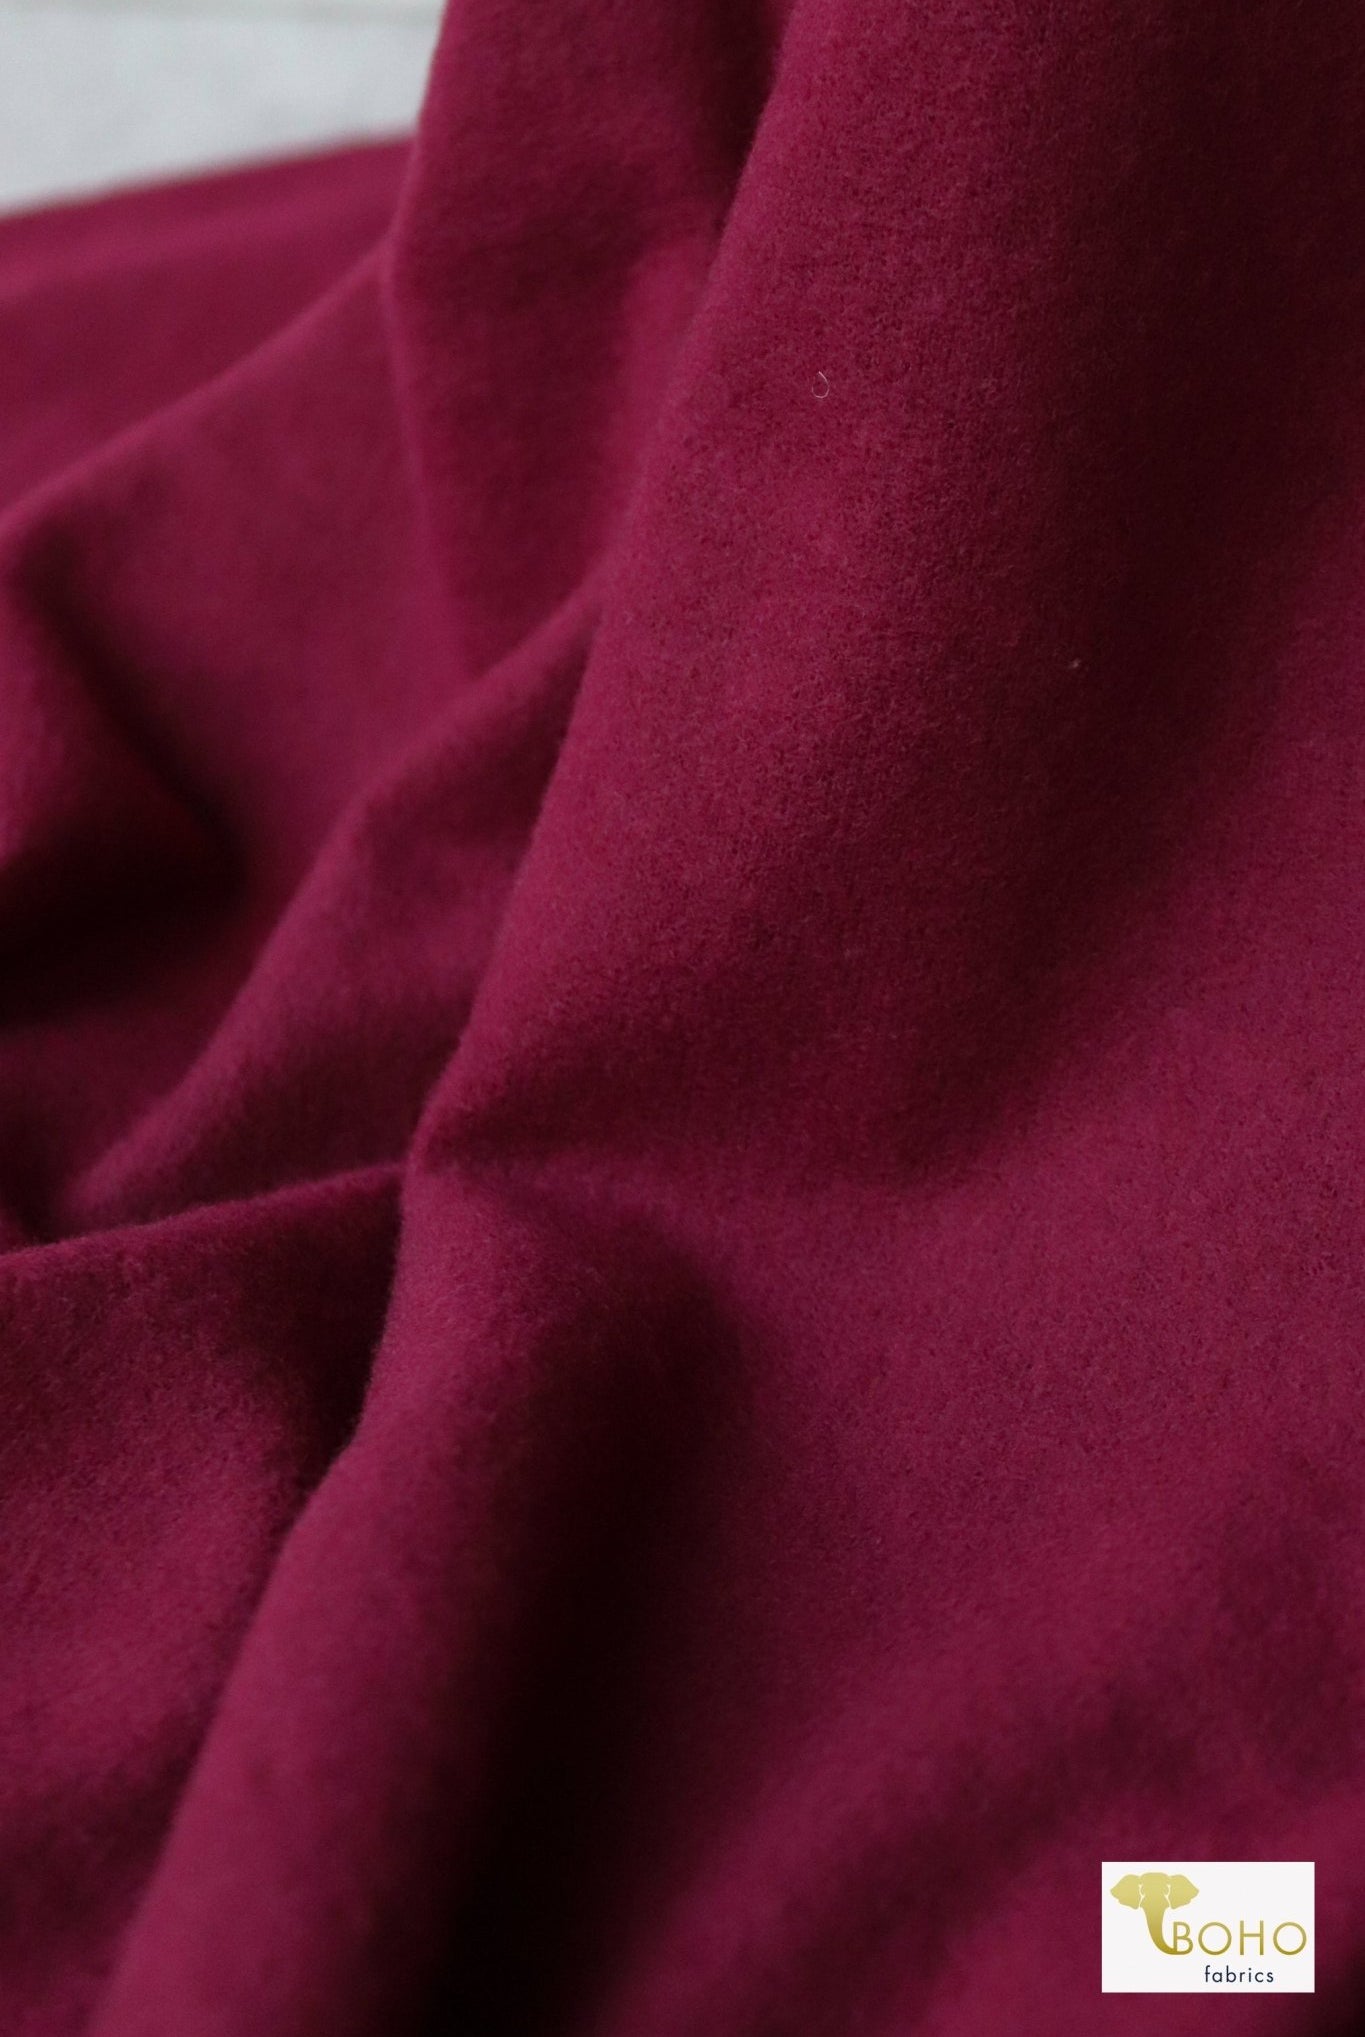 Cranberry Dreams, Brushed Sweater Knit - Boho Fabrics